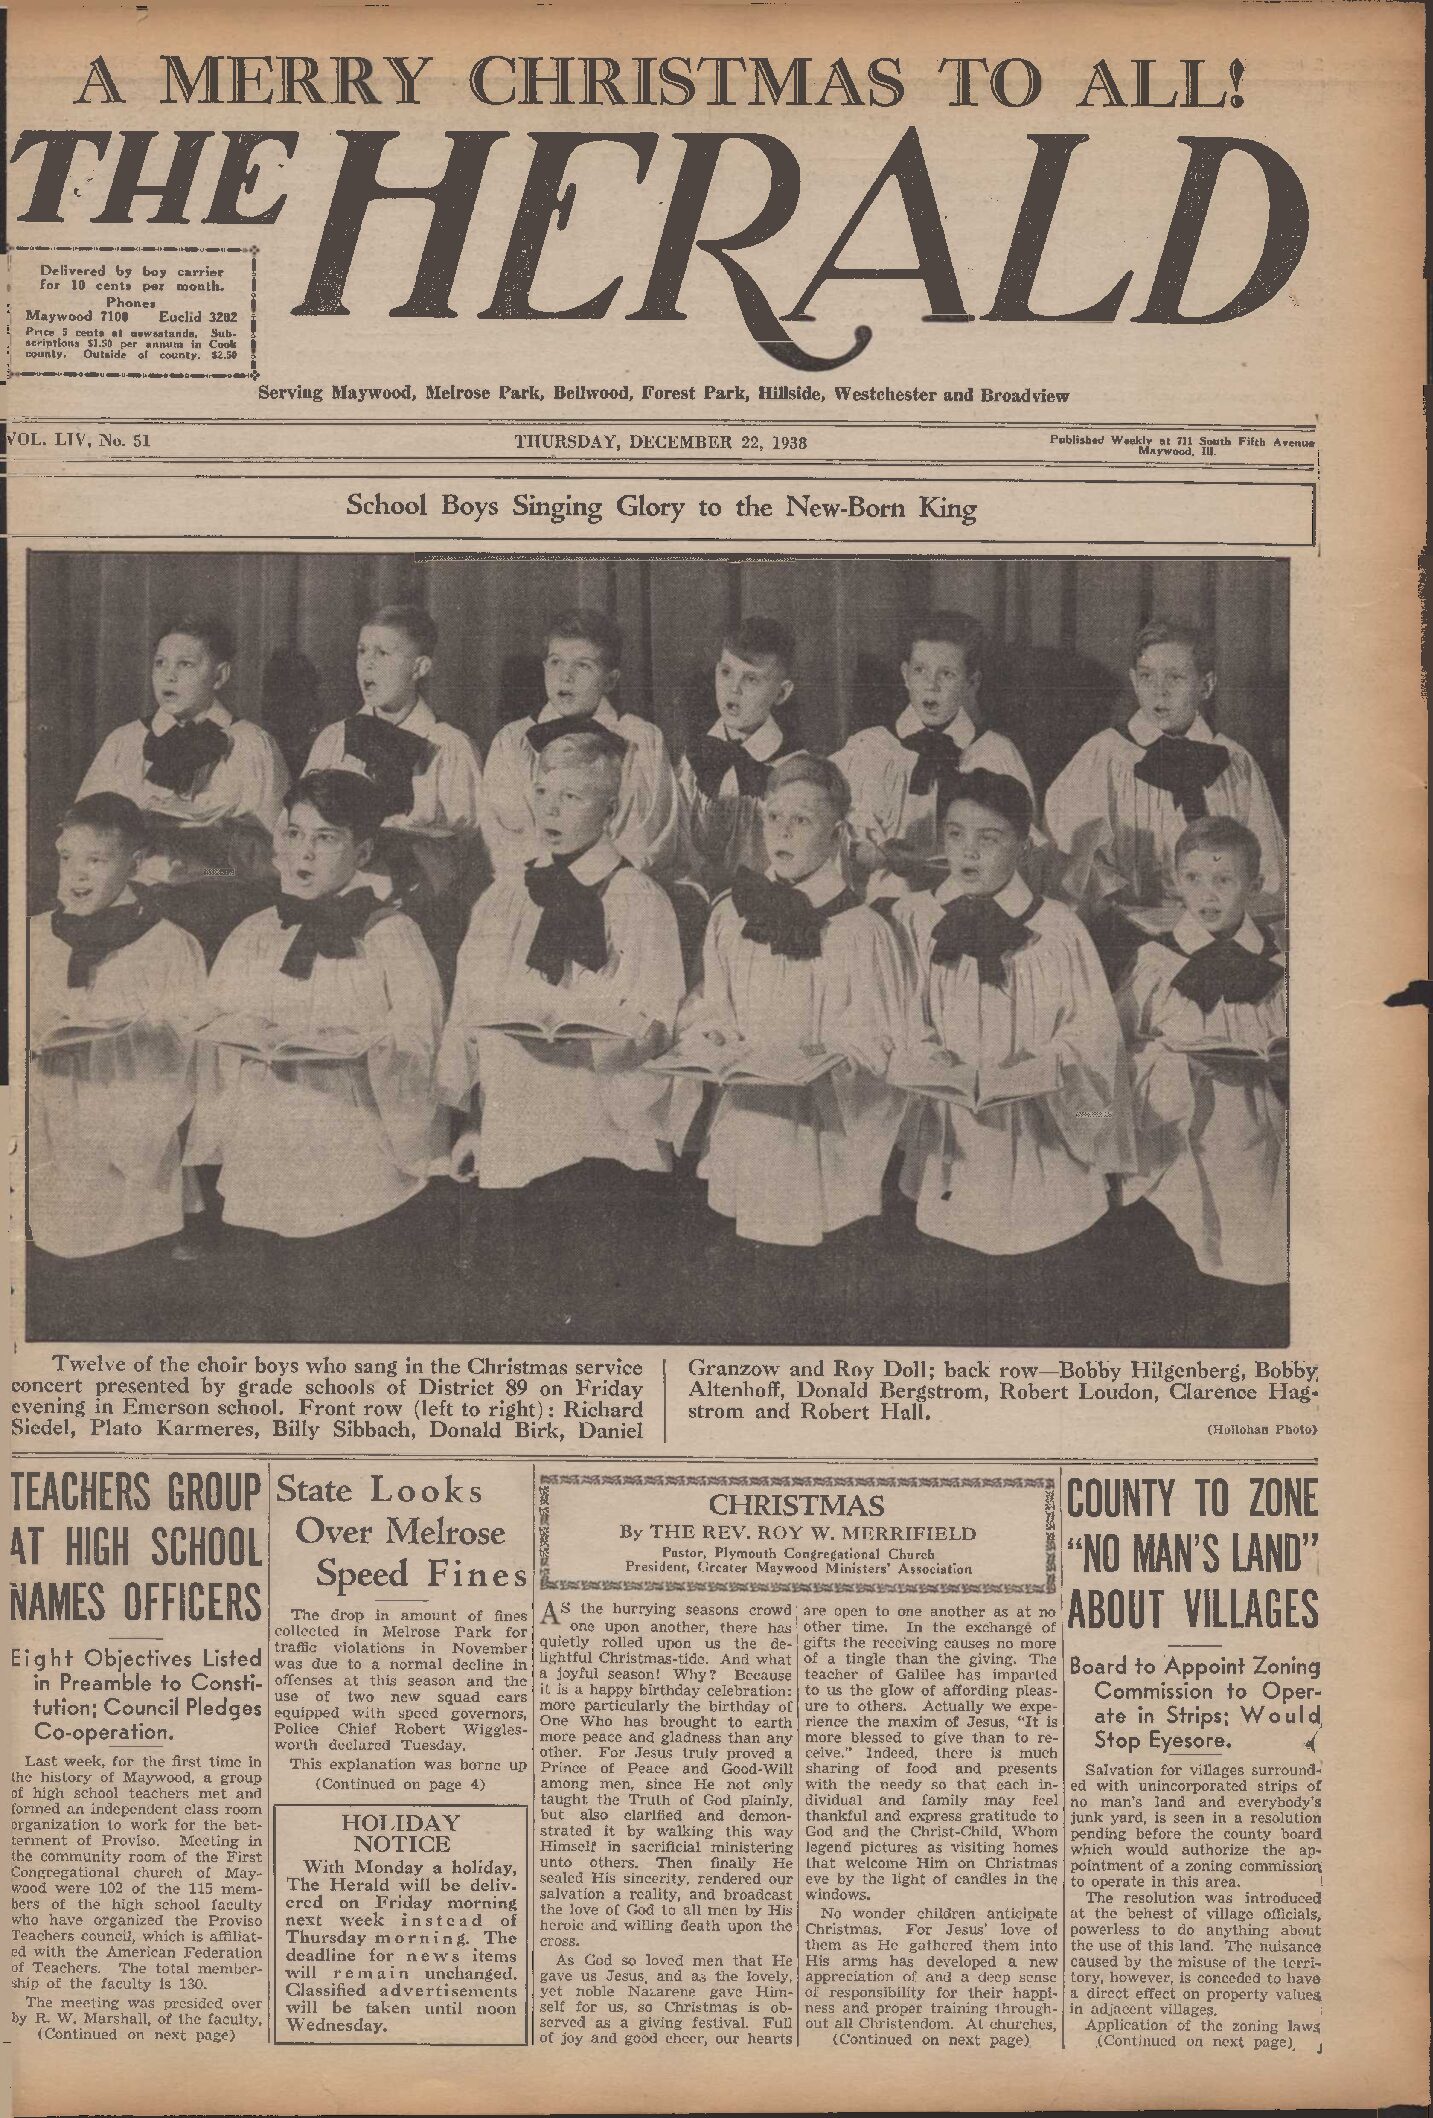 The Herald – 19381222